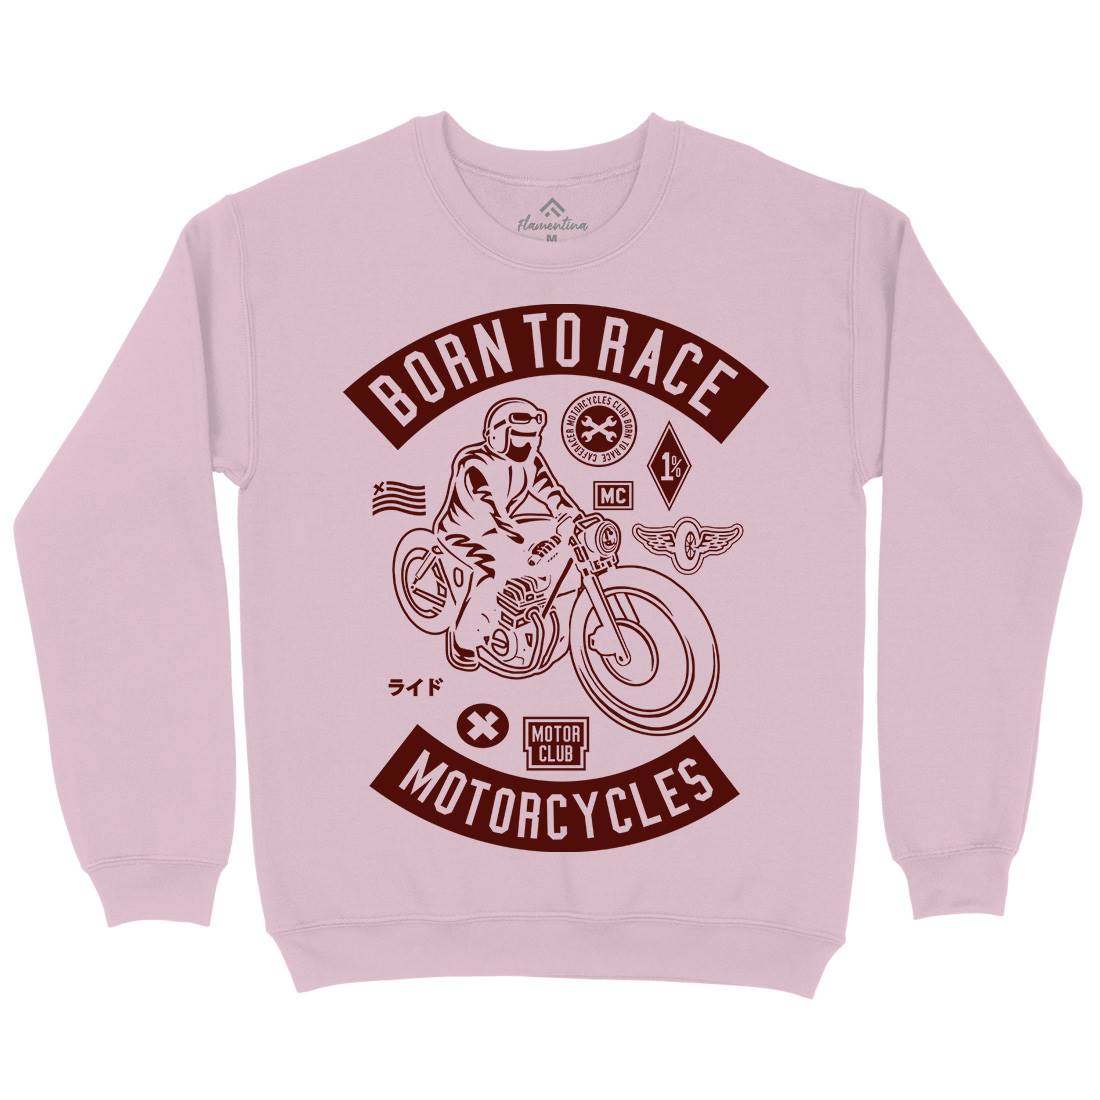 Born To Race Kids Crew Neck Sweatshirt Motorcycles A210